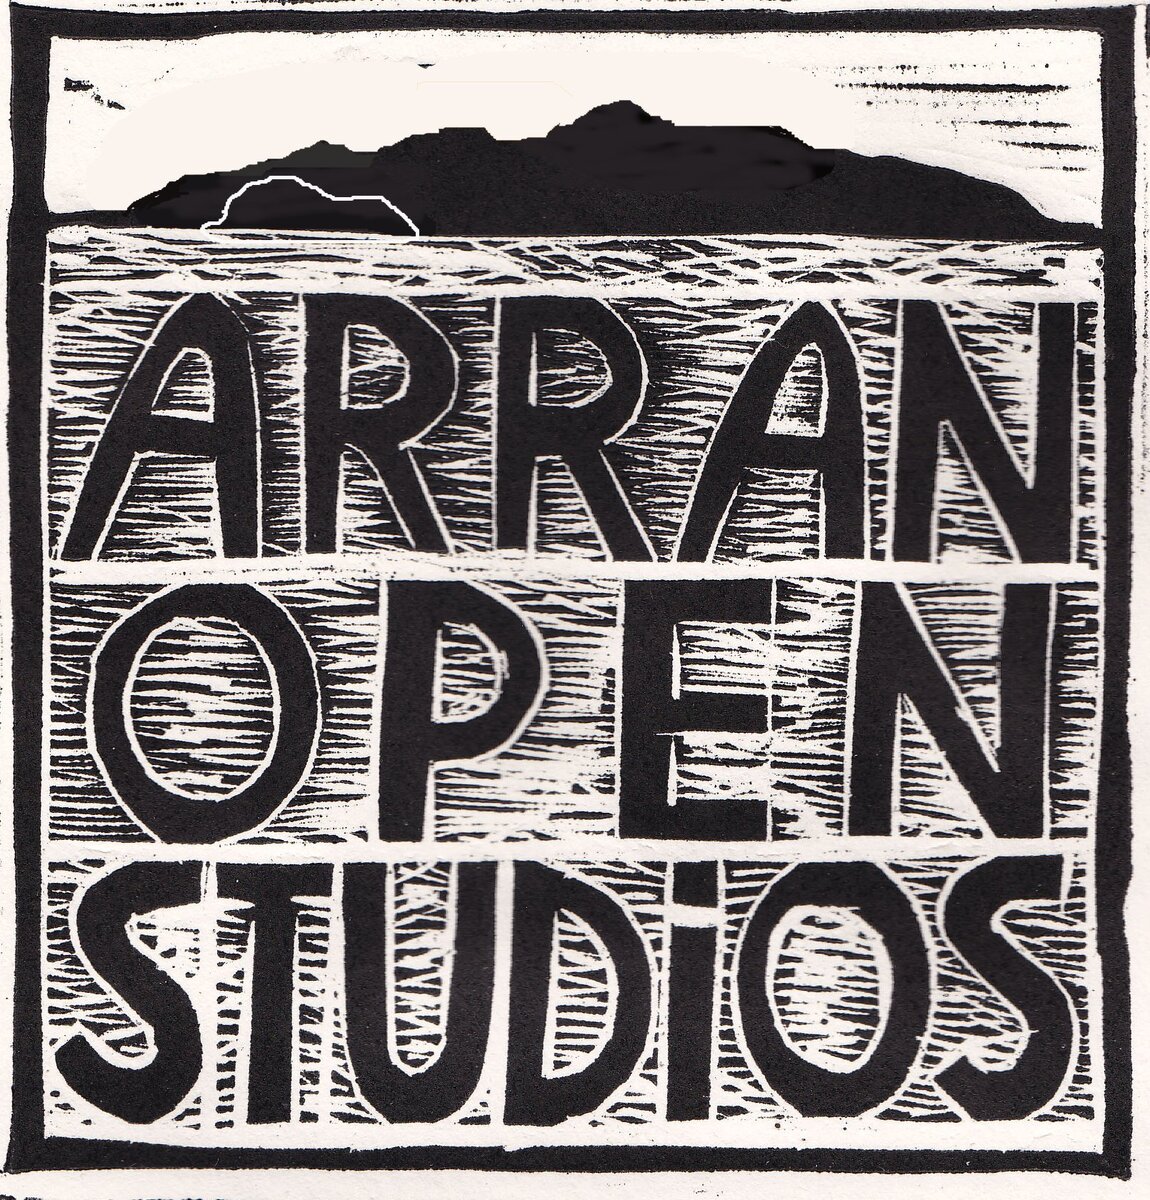 Register now for open studios event